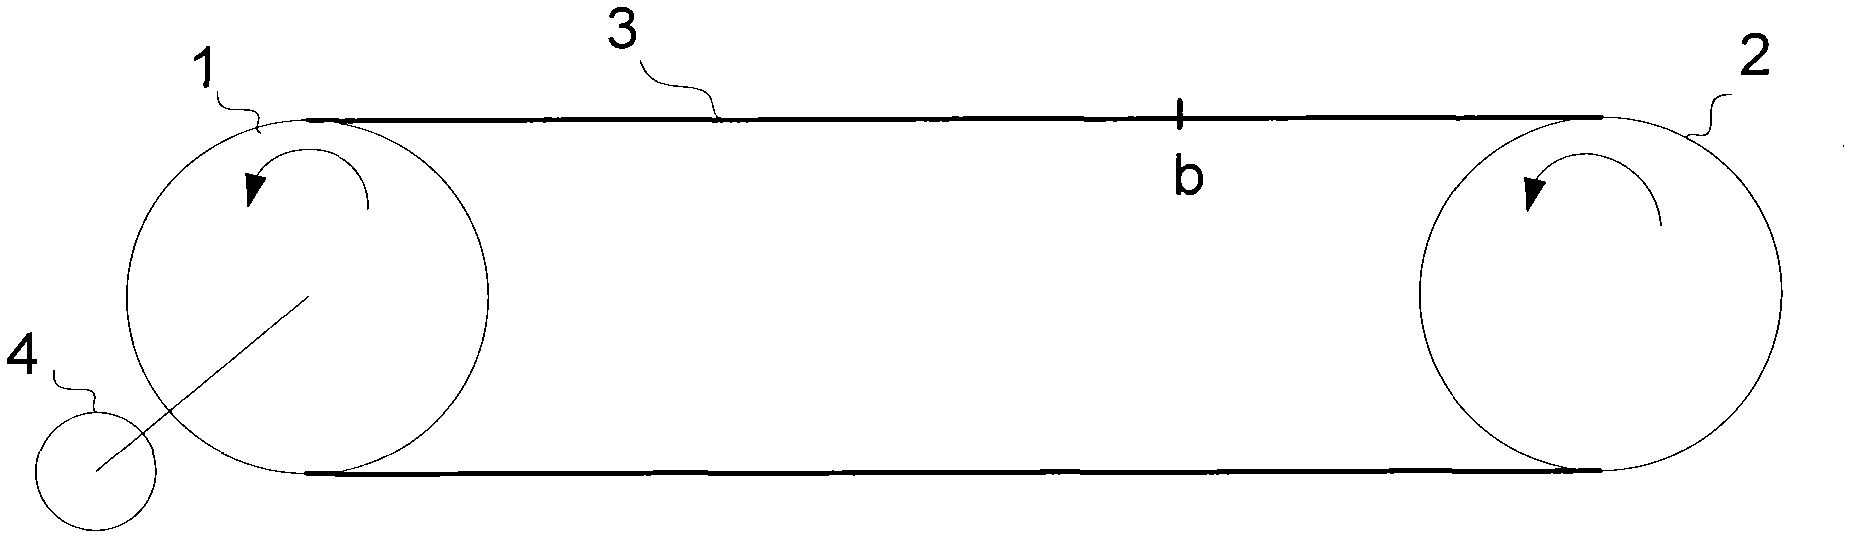 System and method for measuring looseness of transmission belt